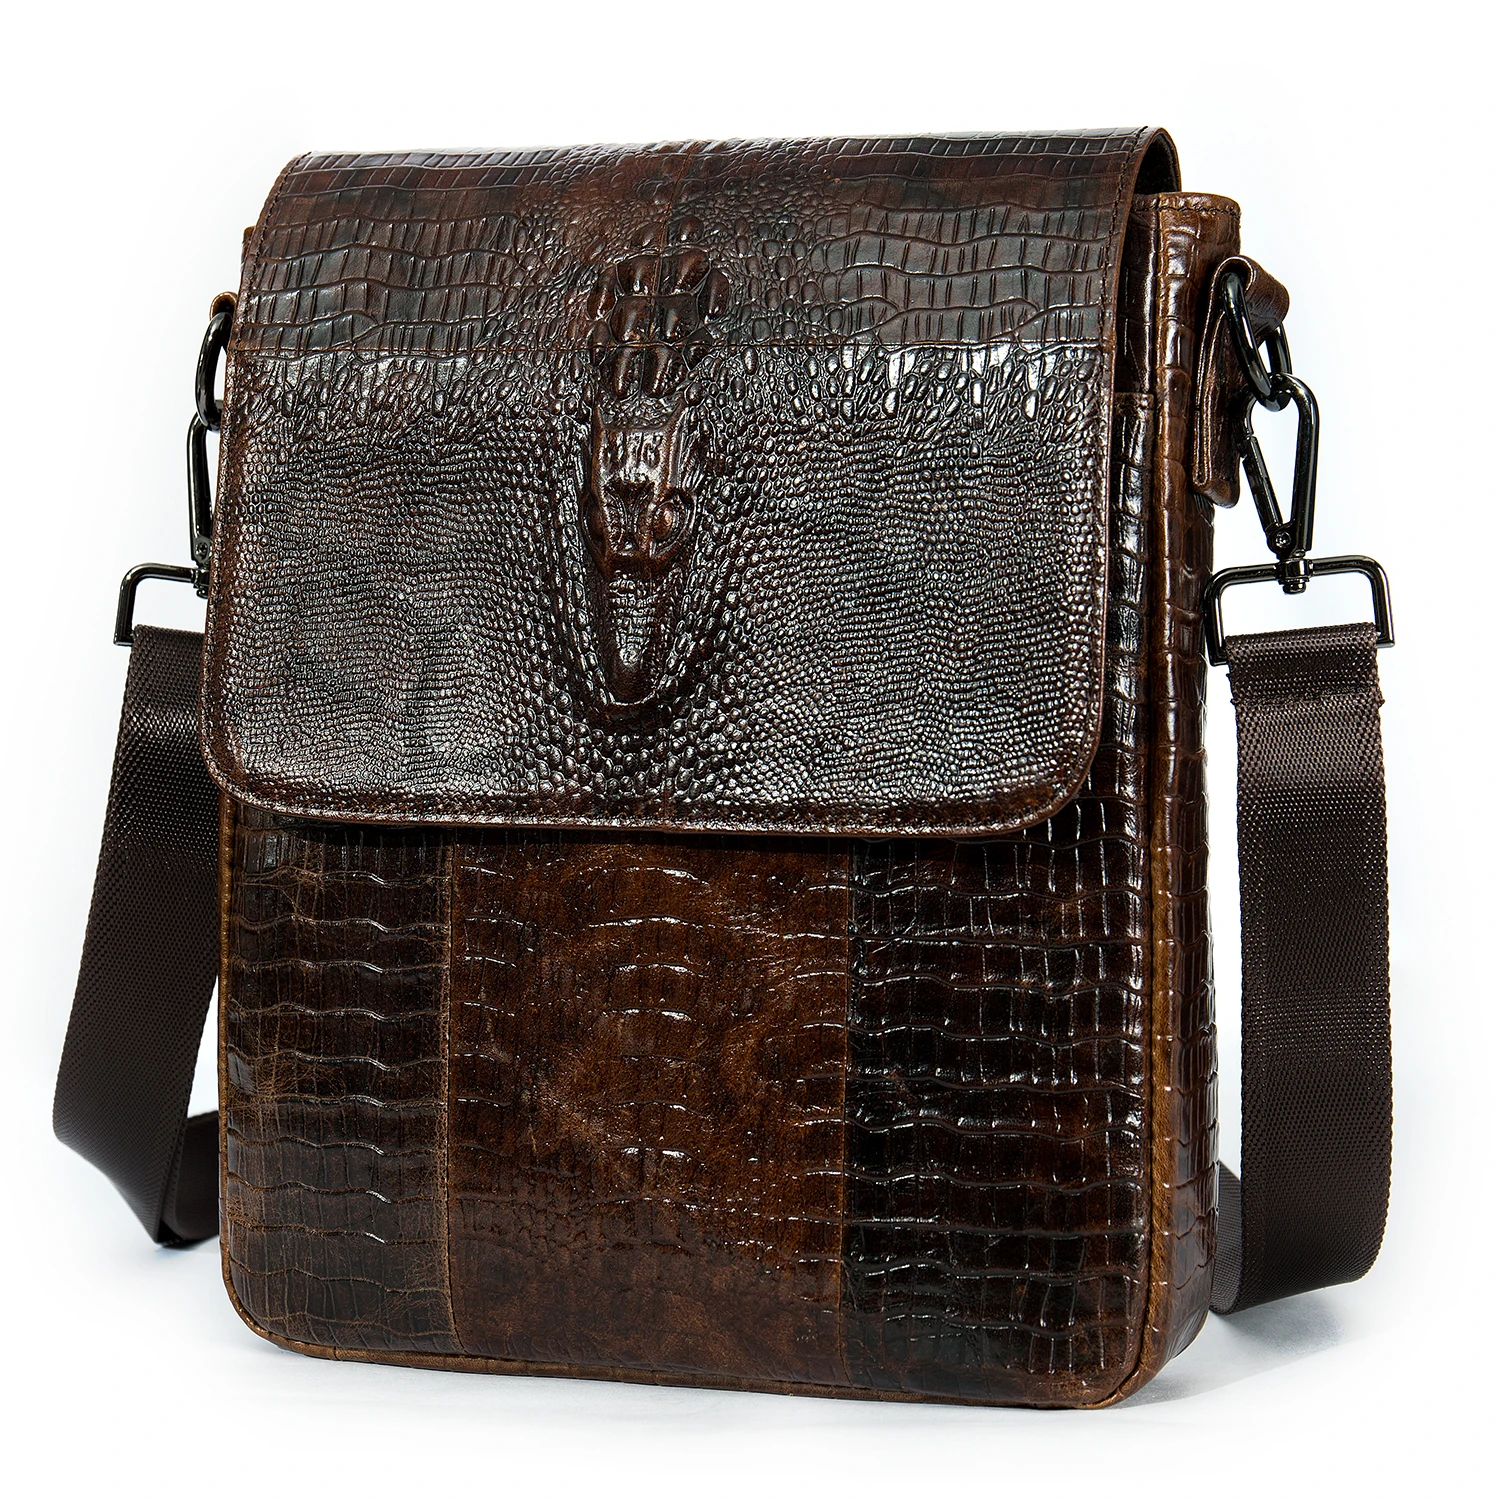 

Amazon Hot Selling 8857 Novelty Crocodile Embossed genuine Leather Flap Messenger Bag for Men Small Crossbody Shoulder Bag, Coffee,black